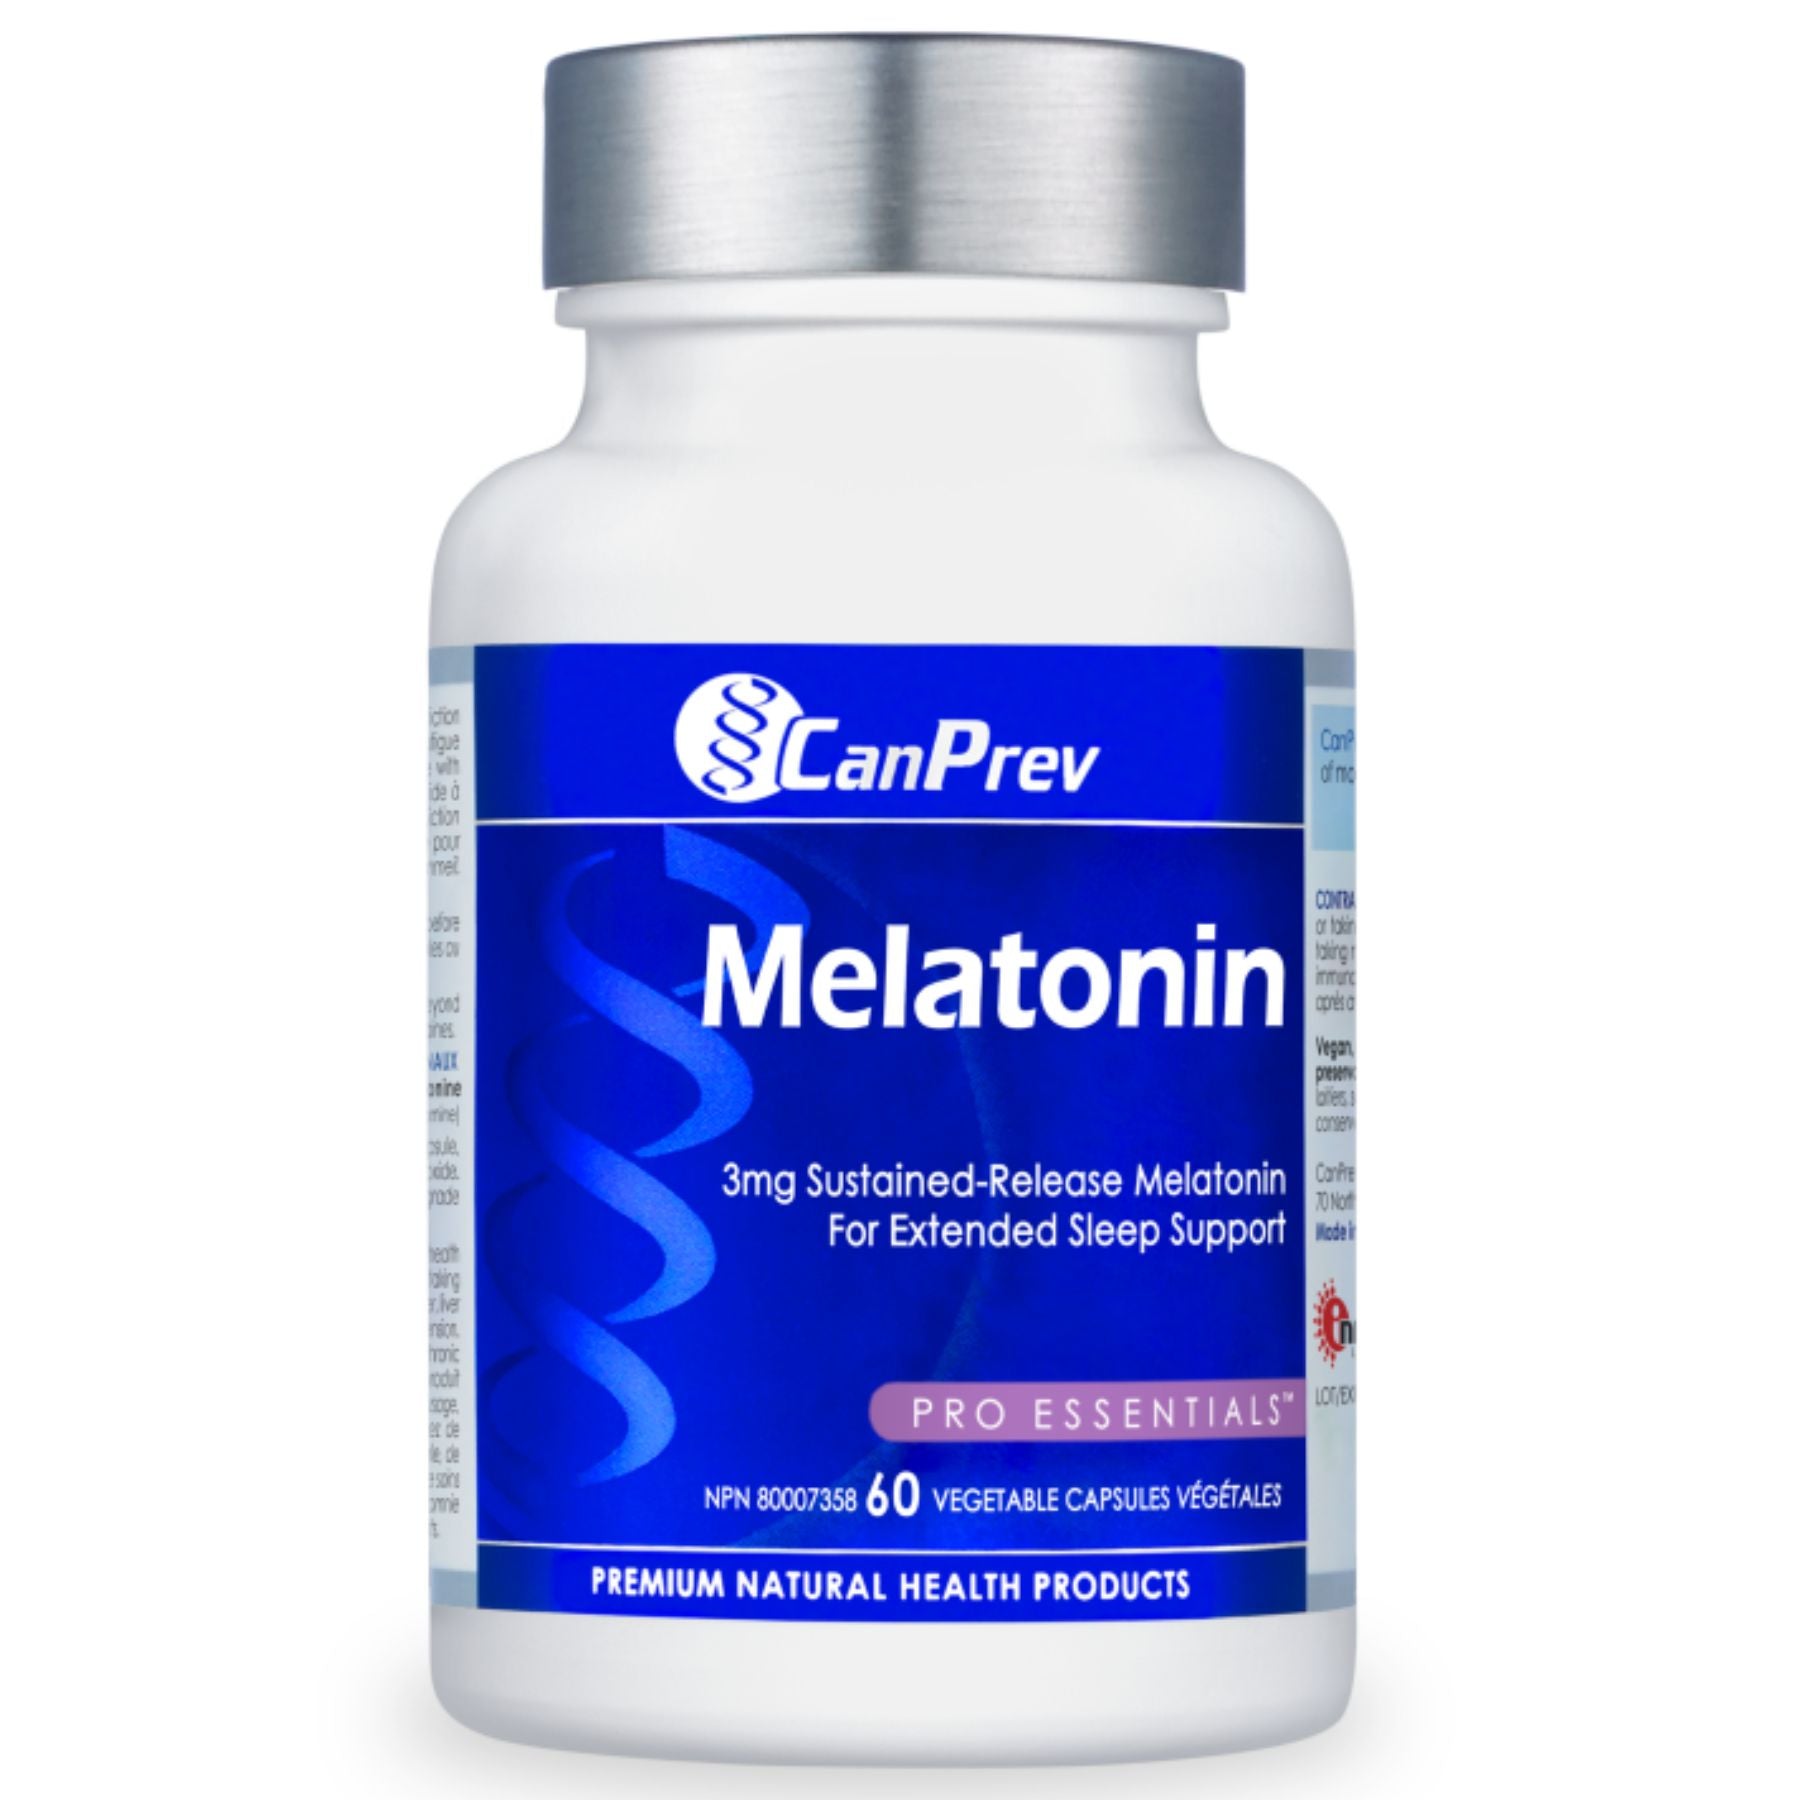 CanPrev Melatonin 3mg Sustained-Release 60s